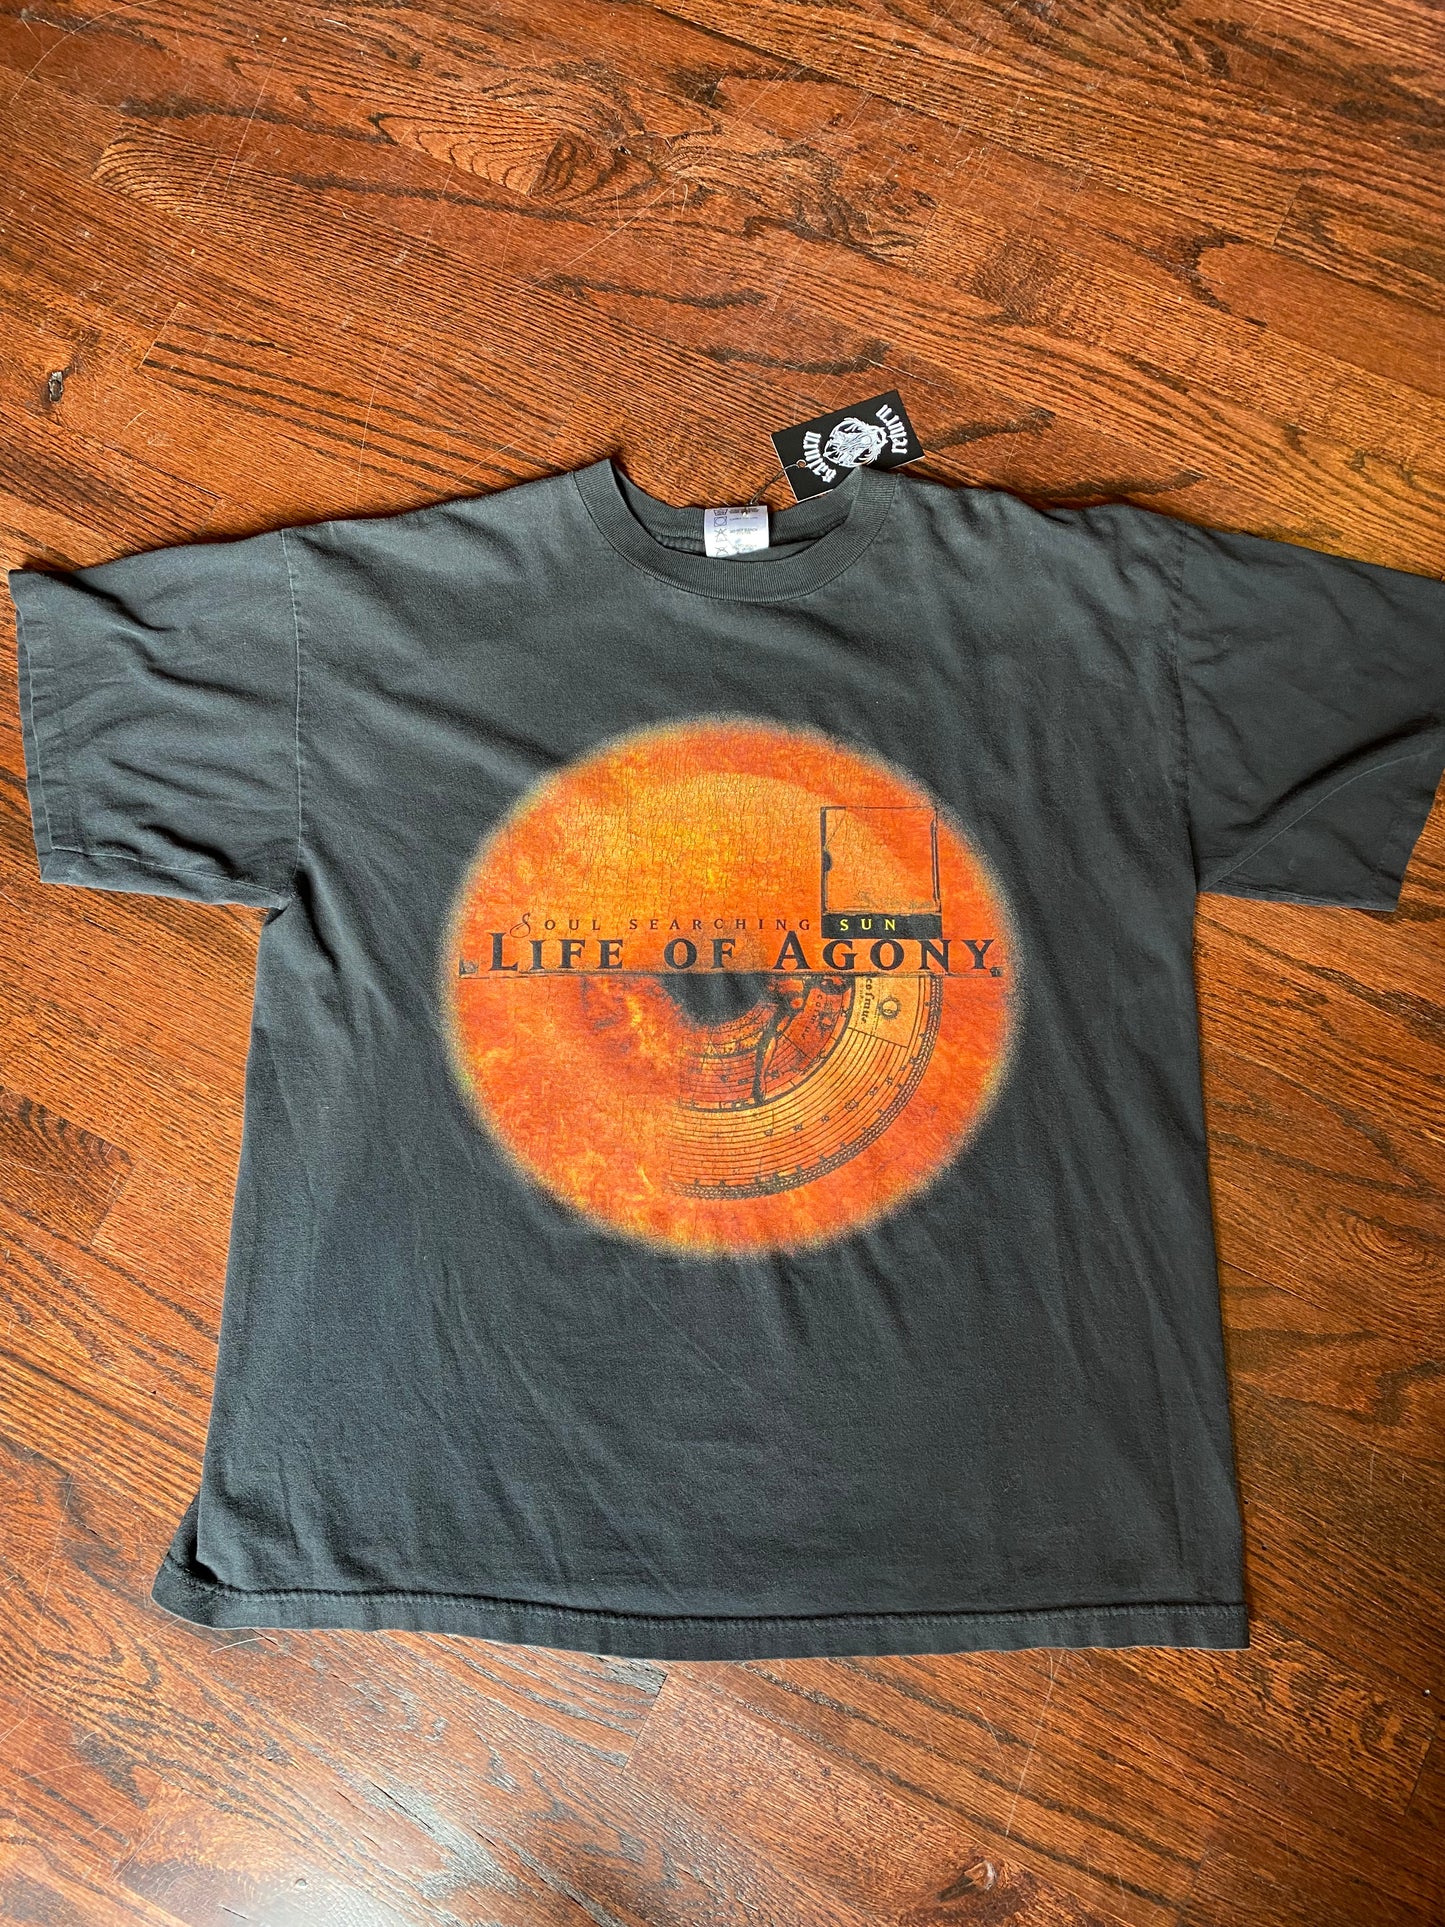 Vintage 1997 Life of Agony “Soul Searching Sun” Album Merch T-Shirt